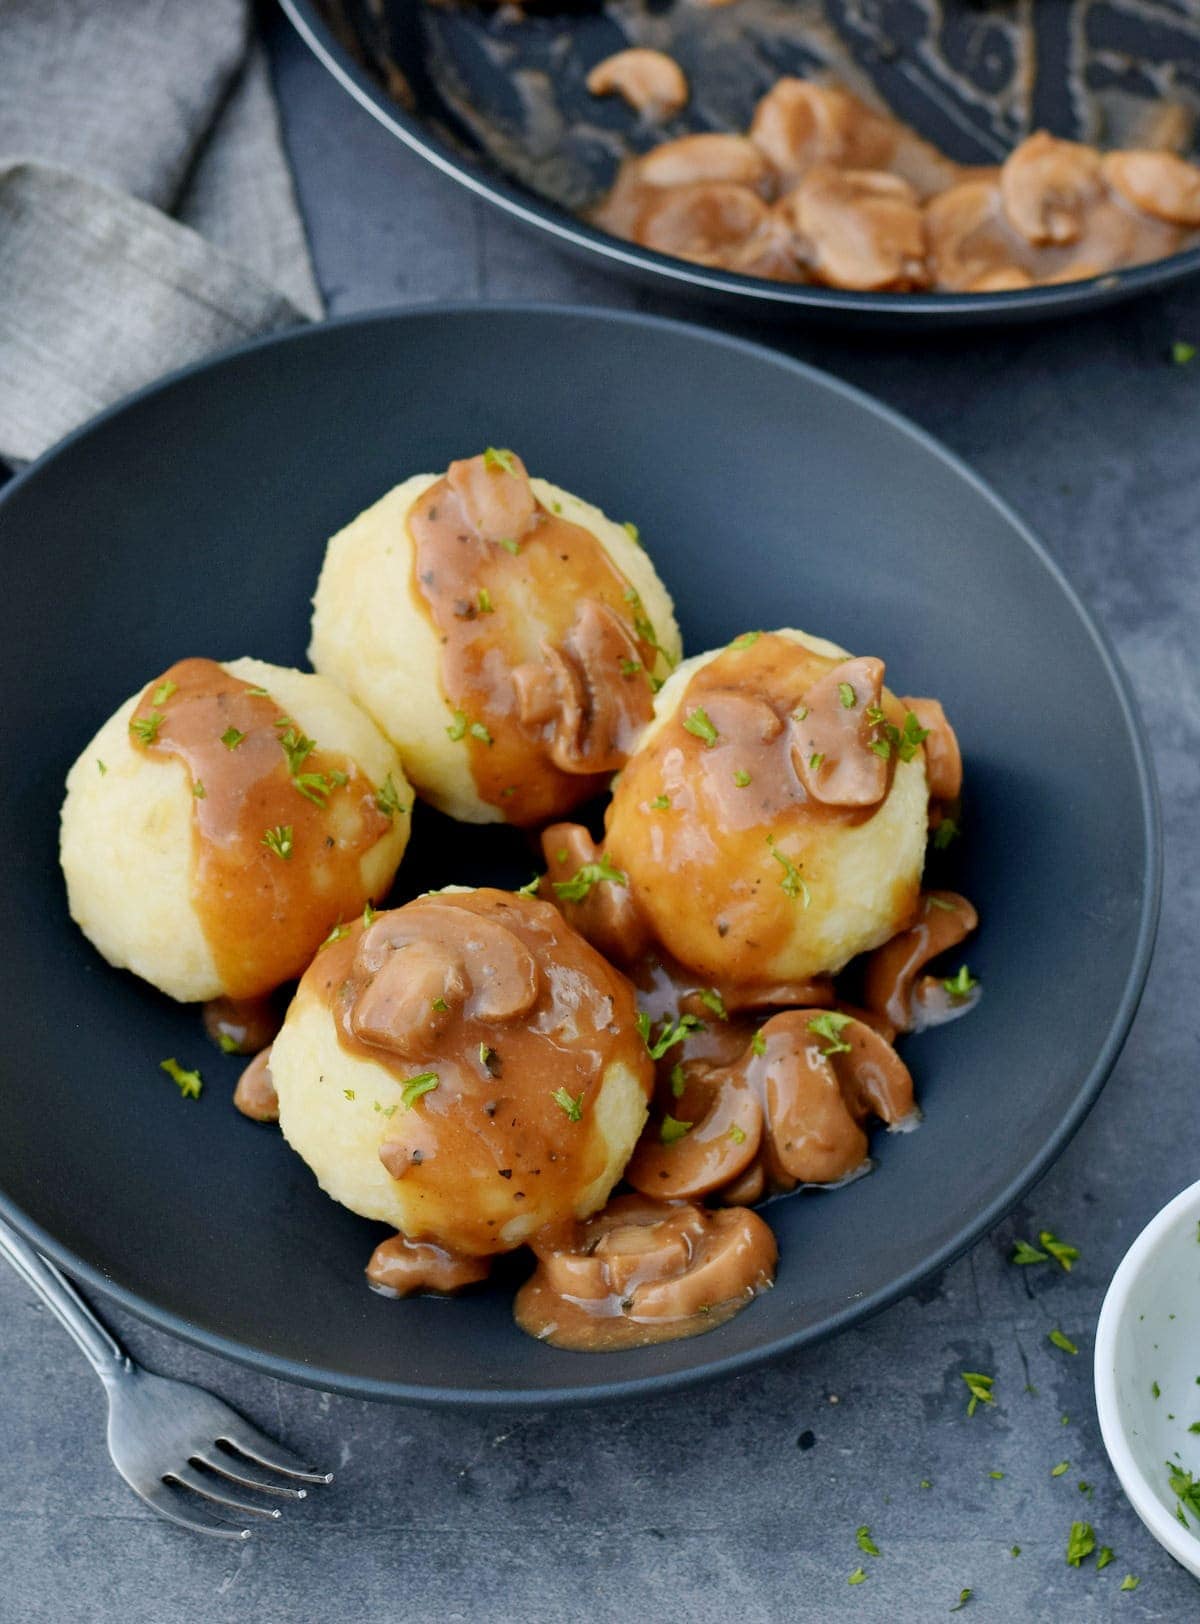 4 potato dumplings with mushroom sauce in a black bowl